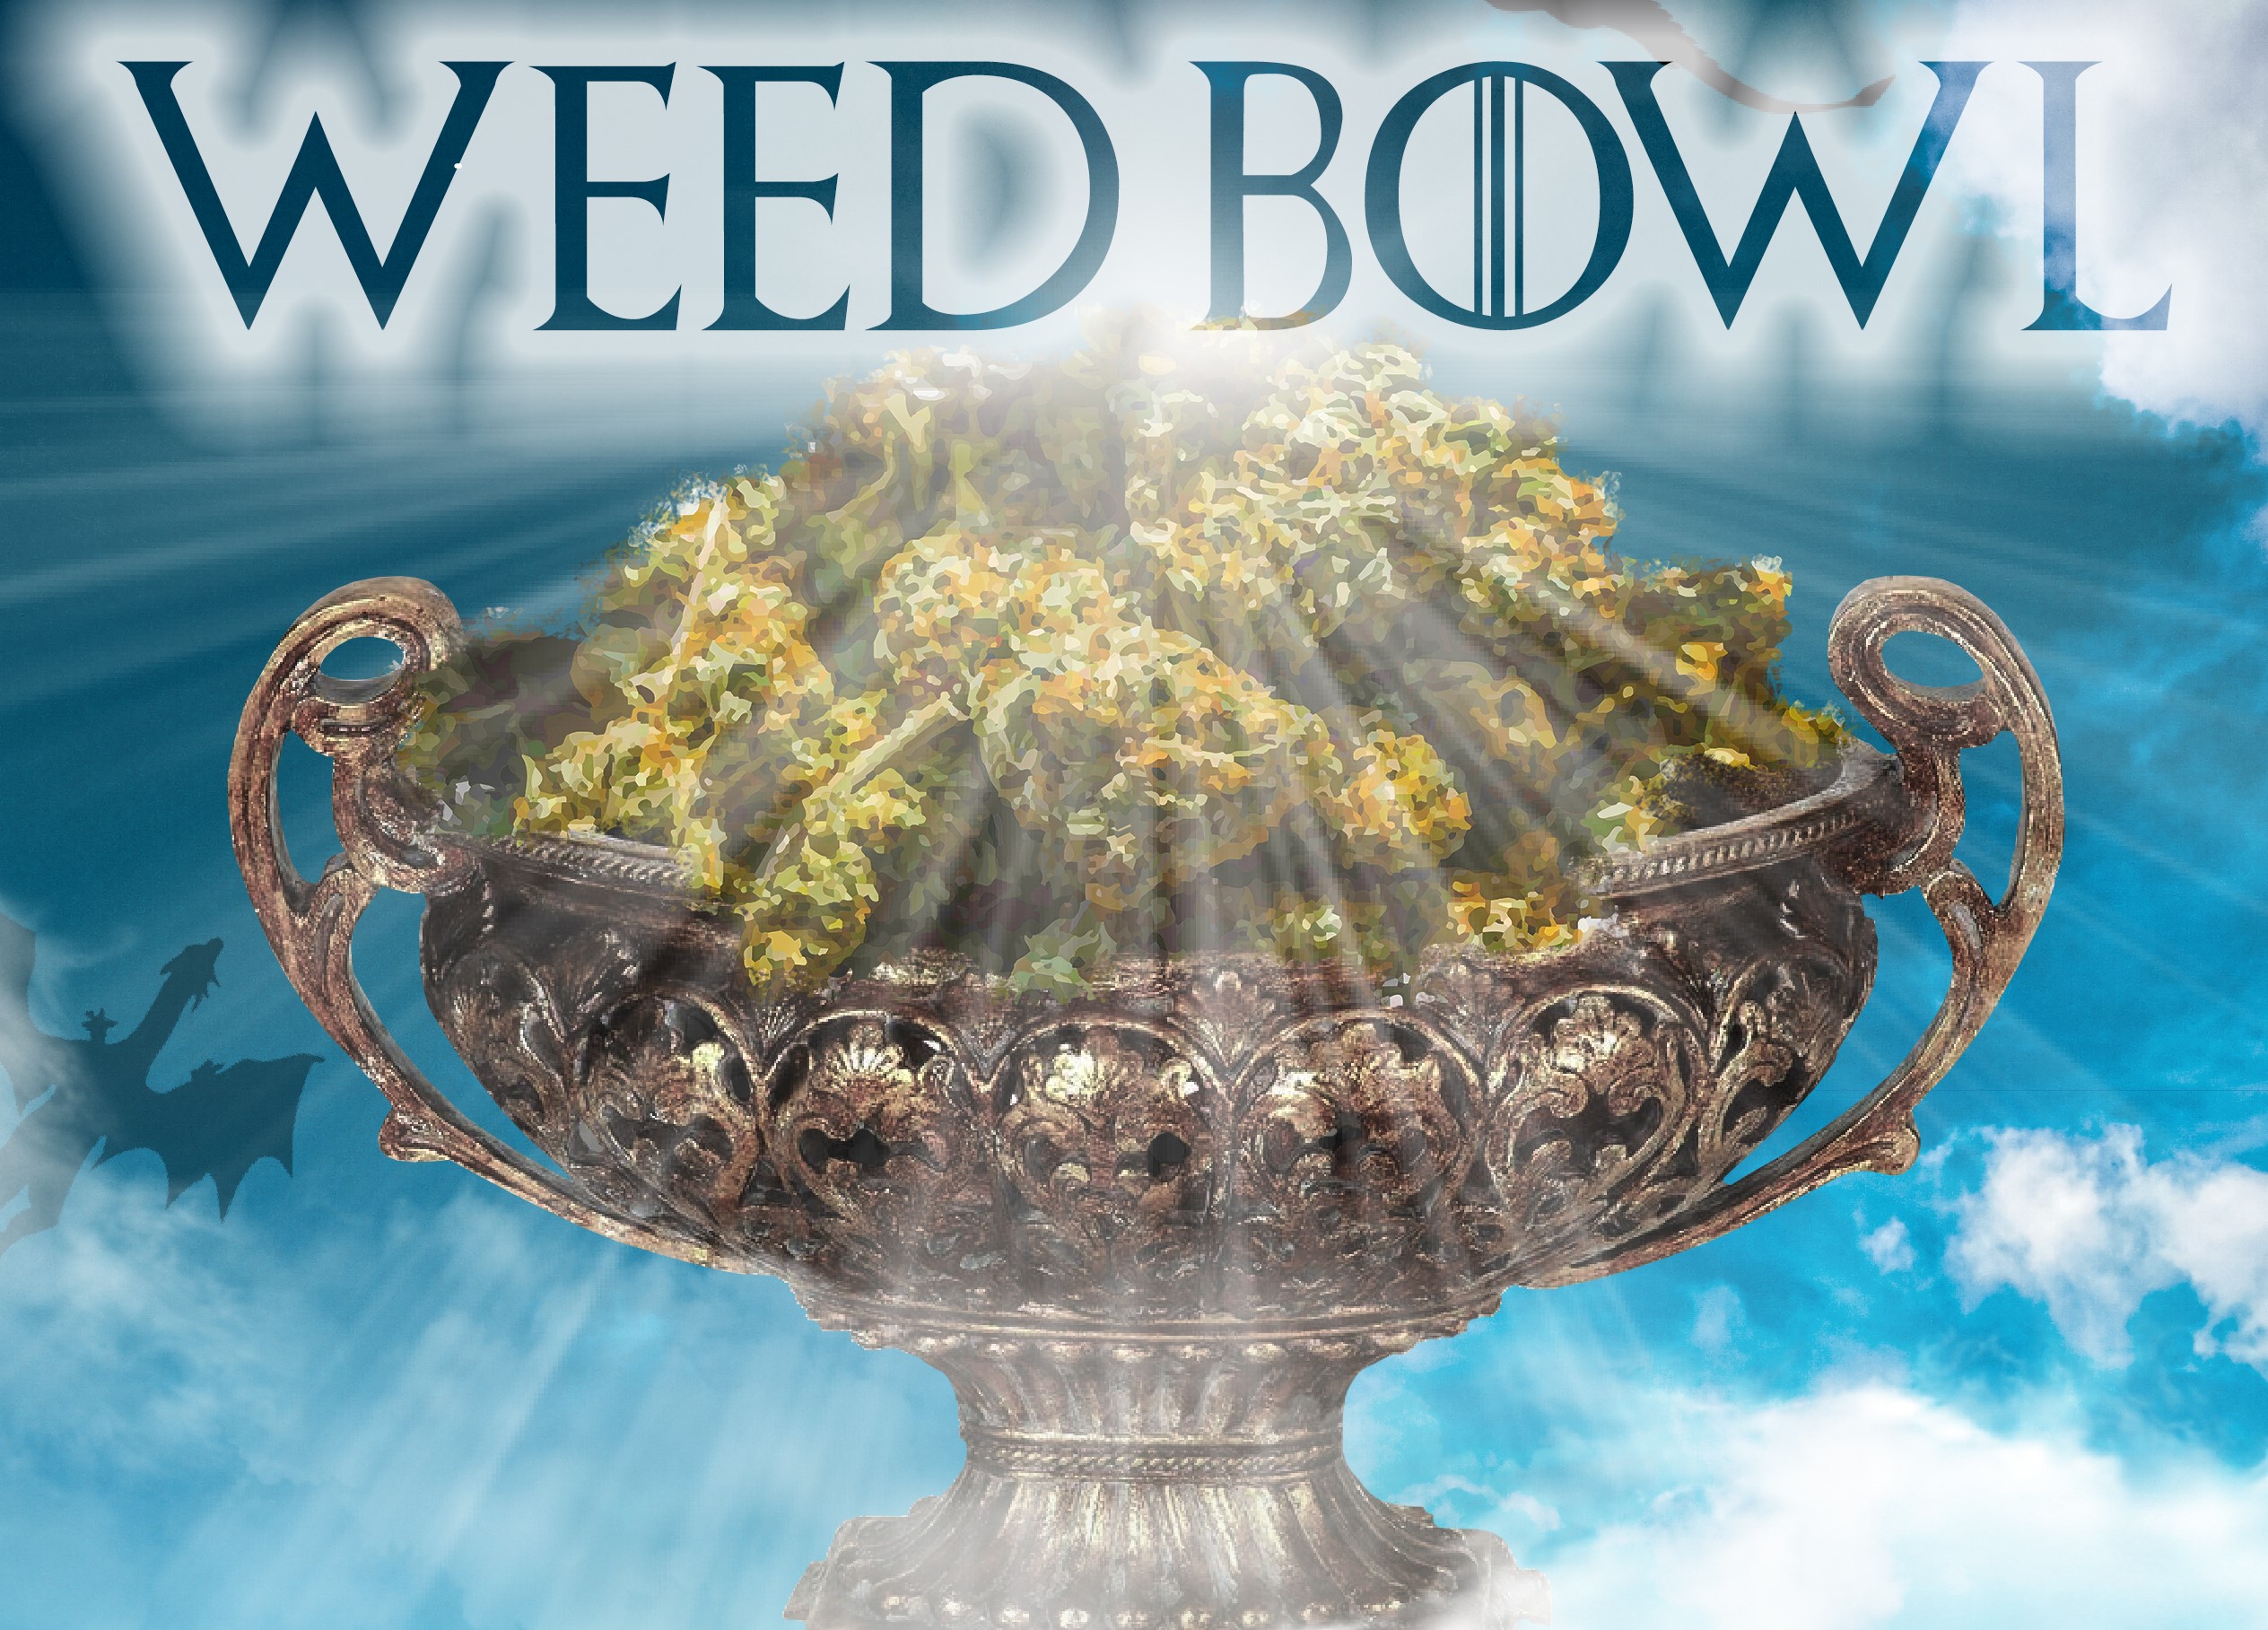 Weed Bowl